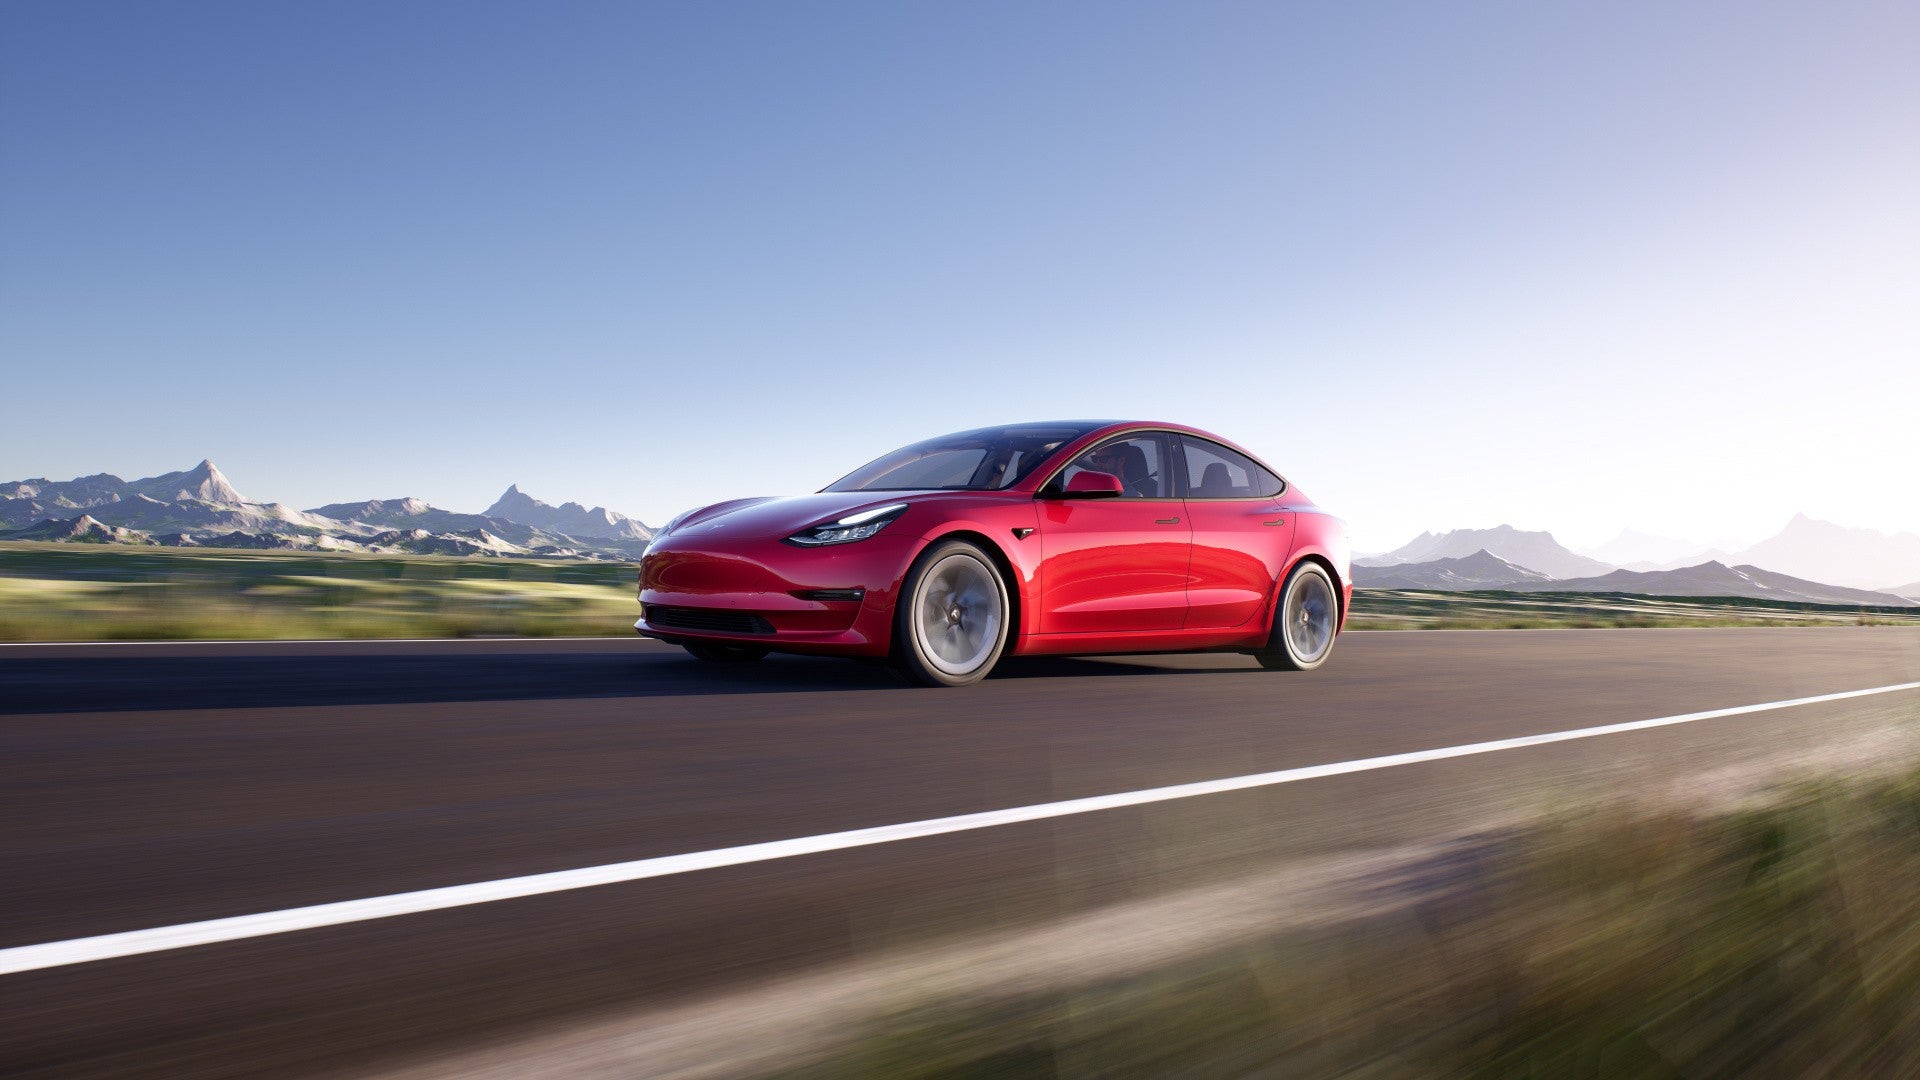 Tesla Giga Shanghai Could Supply Model 3 SR+ to European Market with Higher Profit Margin